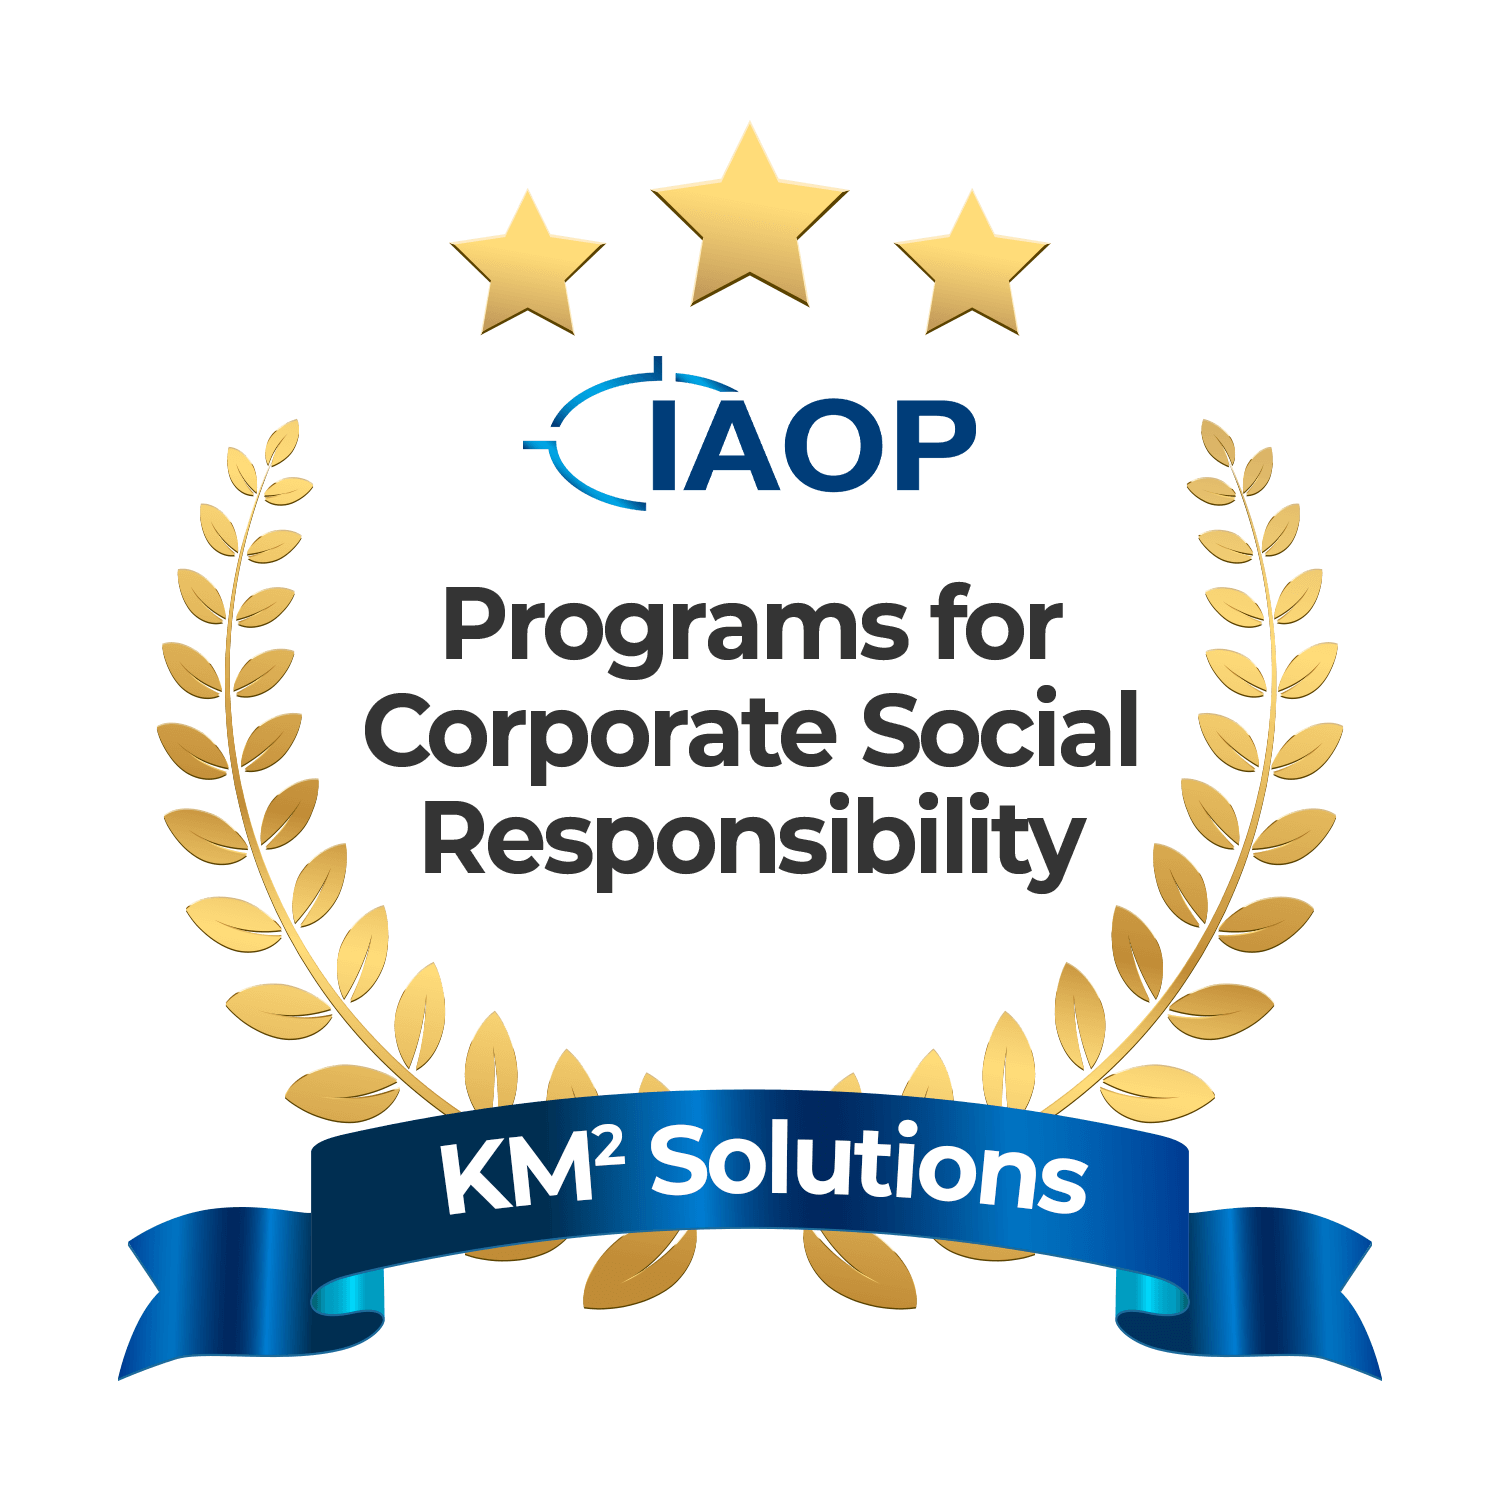 KM² Solutions IAOP Award